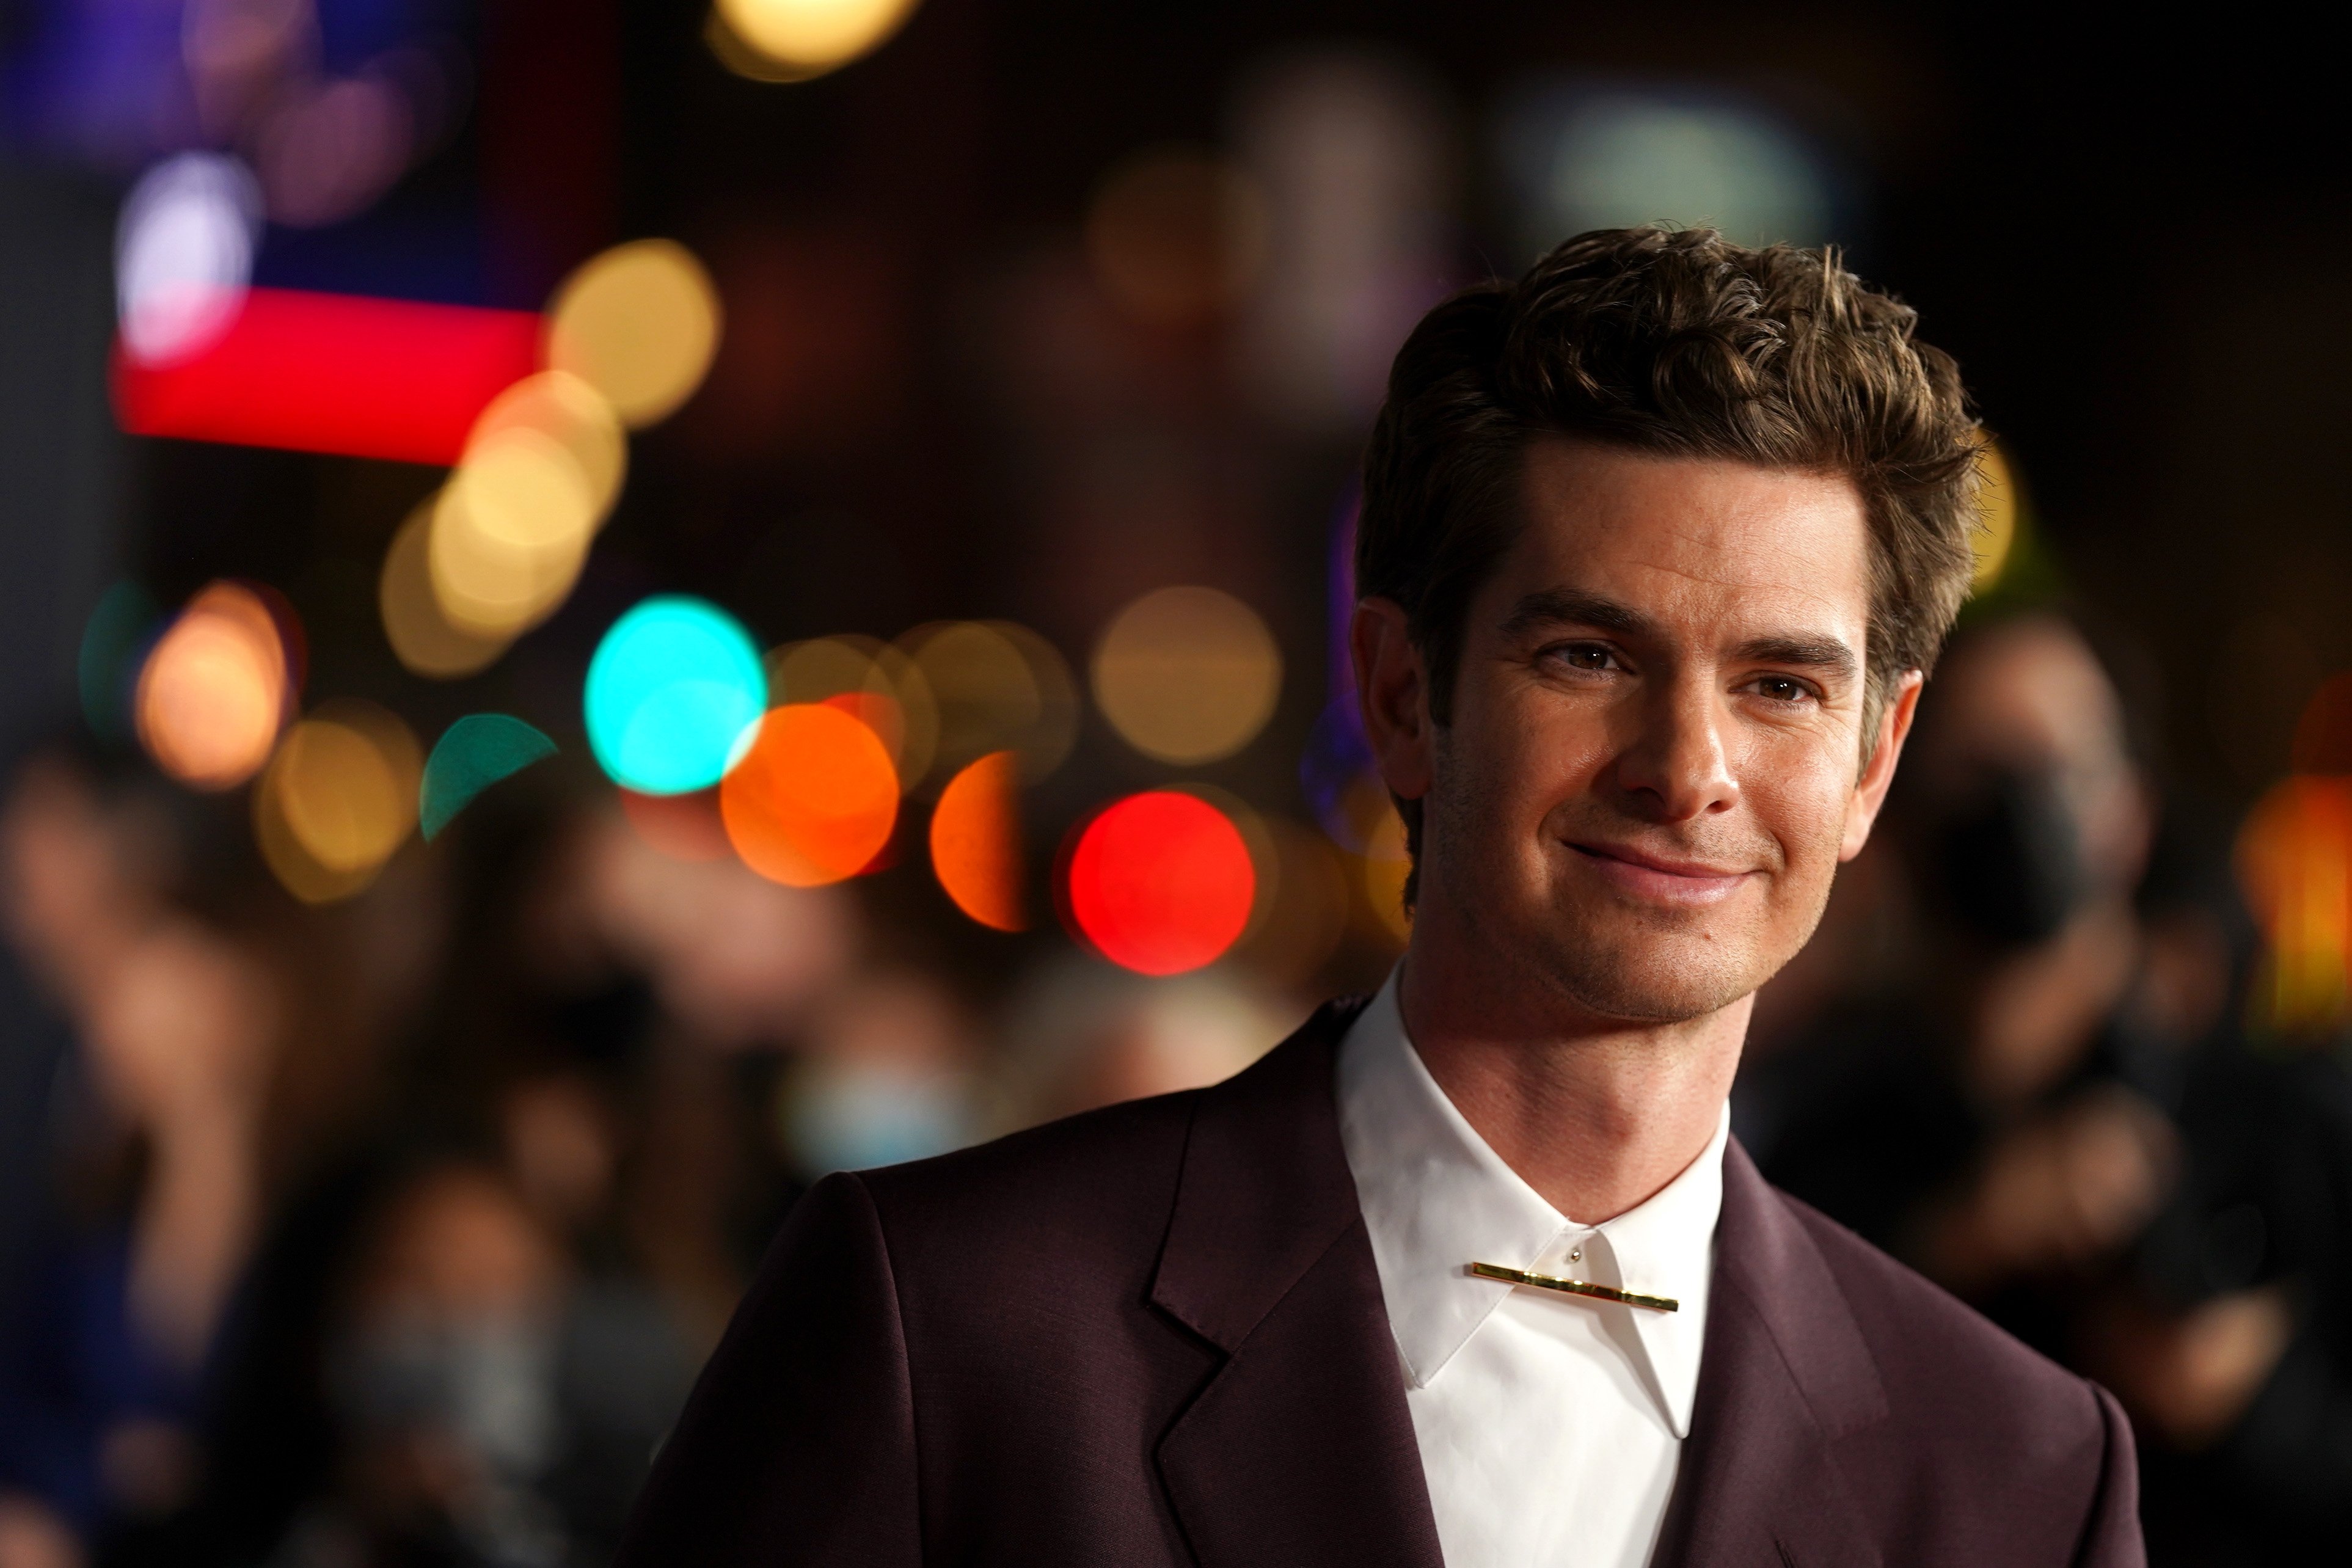 'Spider-Man: No Way Home' star Andrew Garfield wears a maroon blazer over a white button-up shirt.